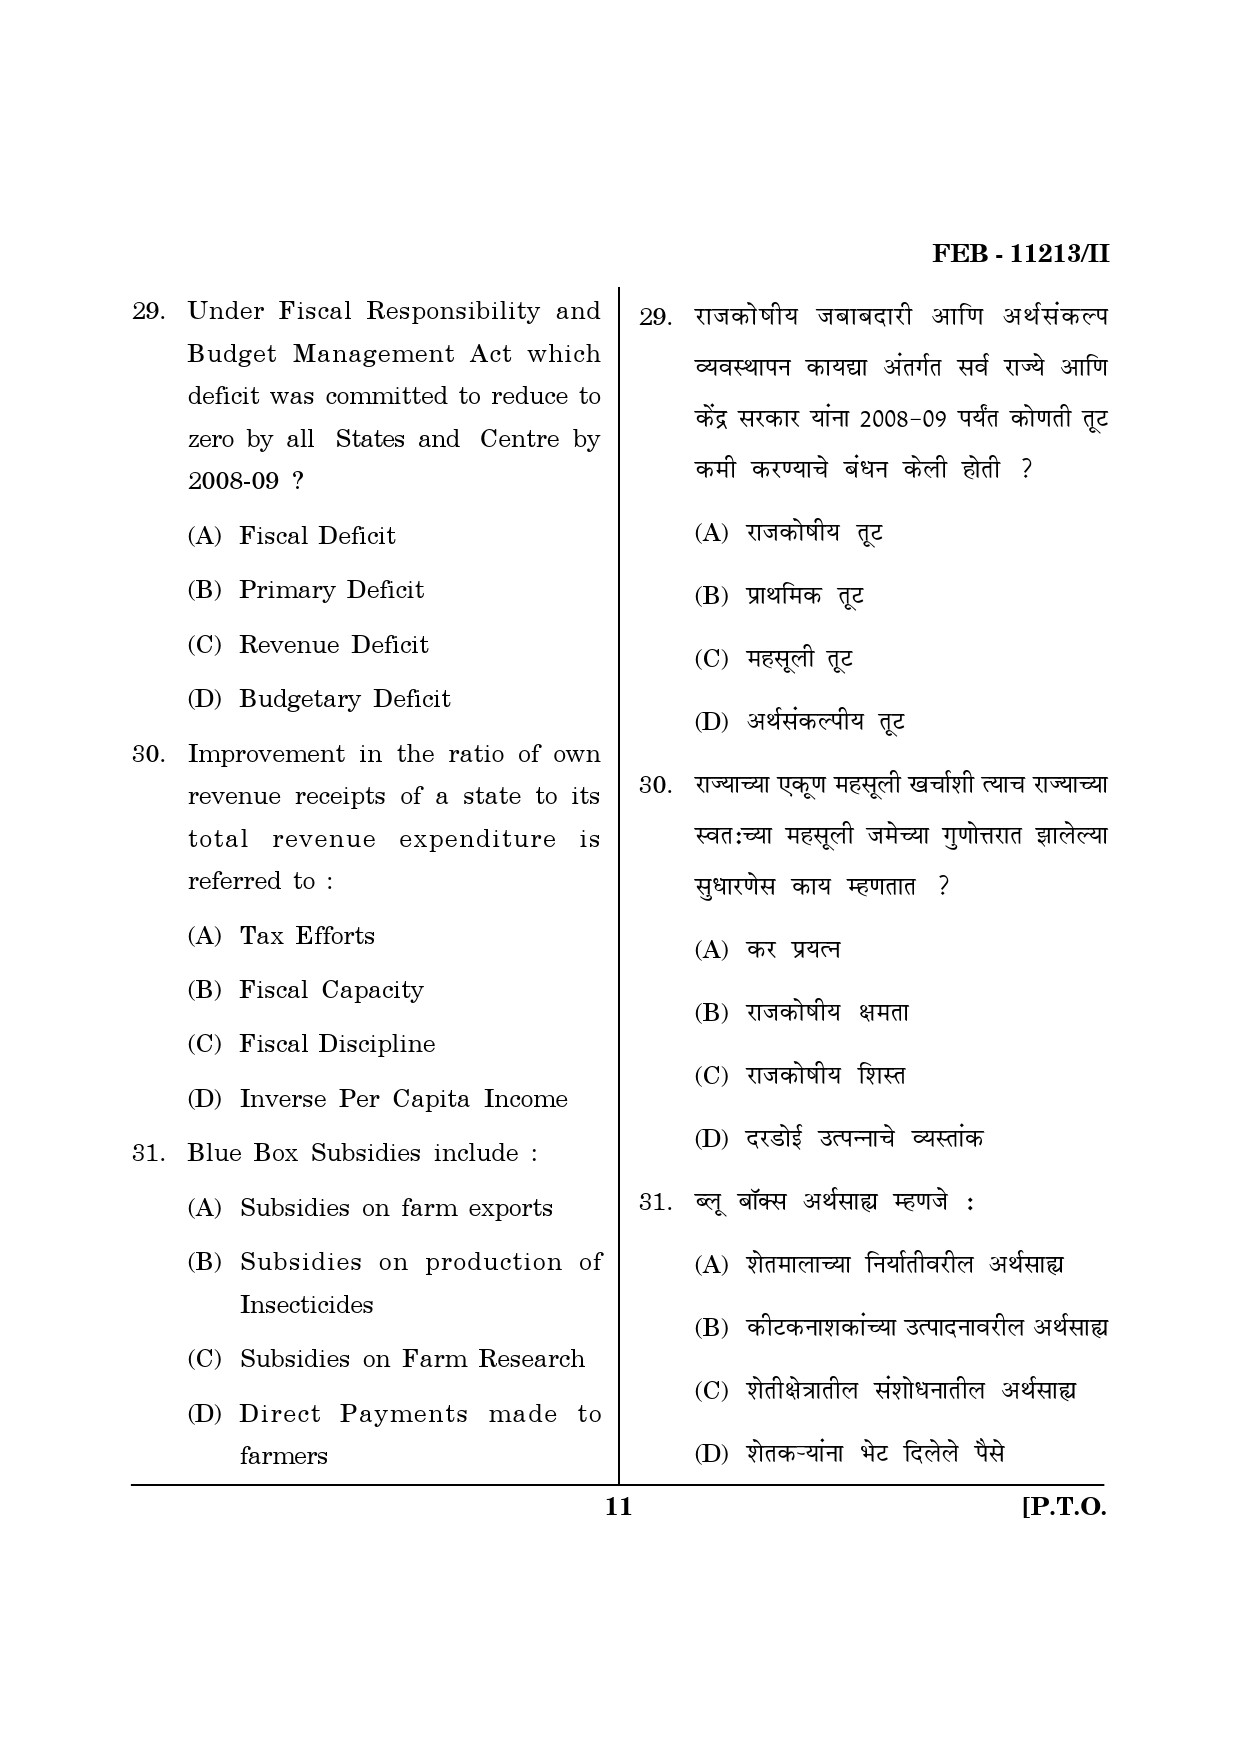 Maharashtra SET Economics Question Paper II February 2013 11